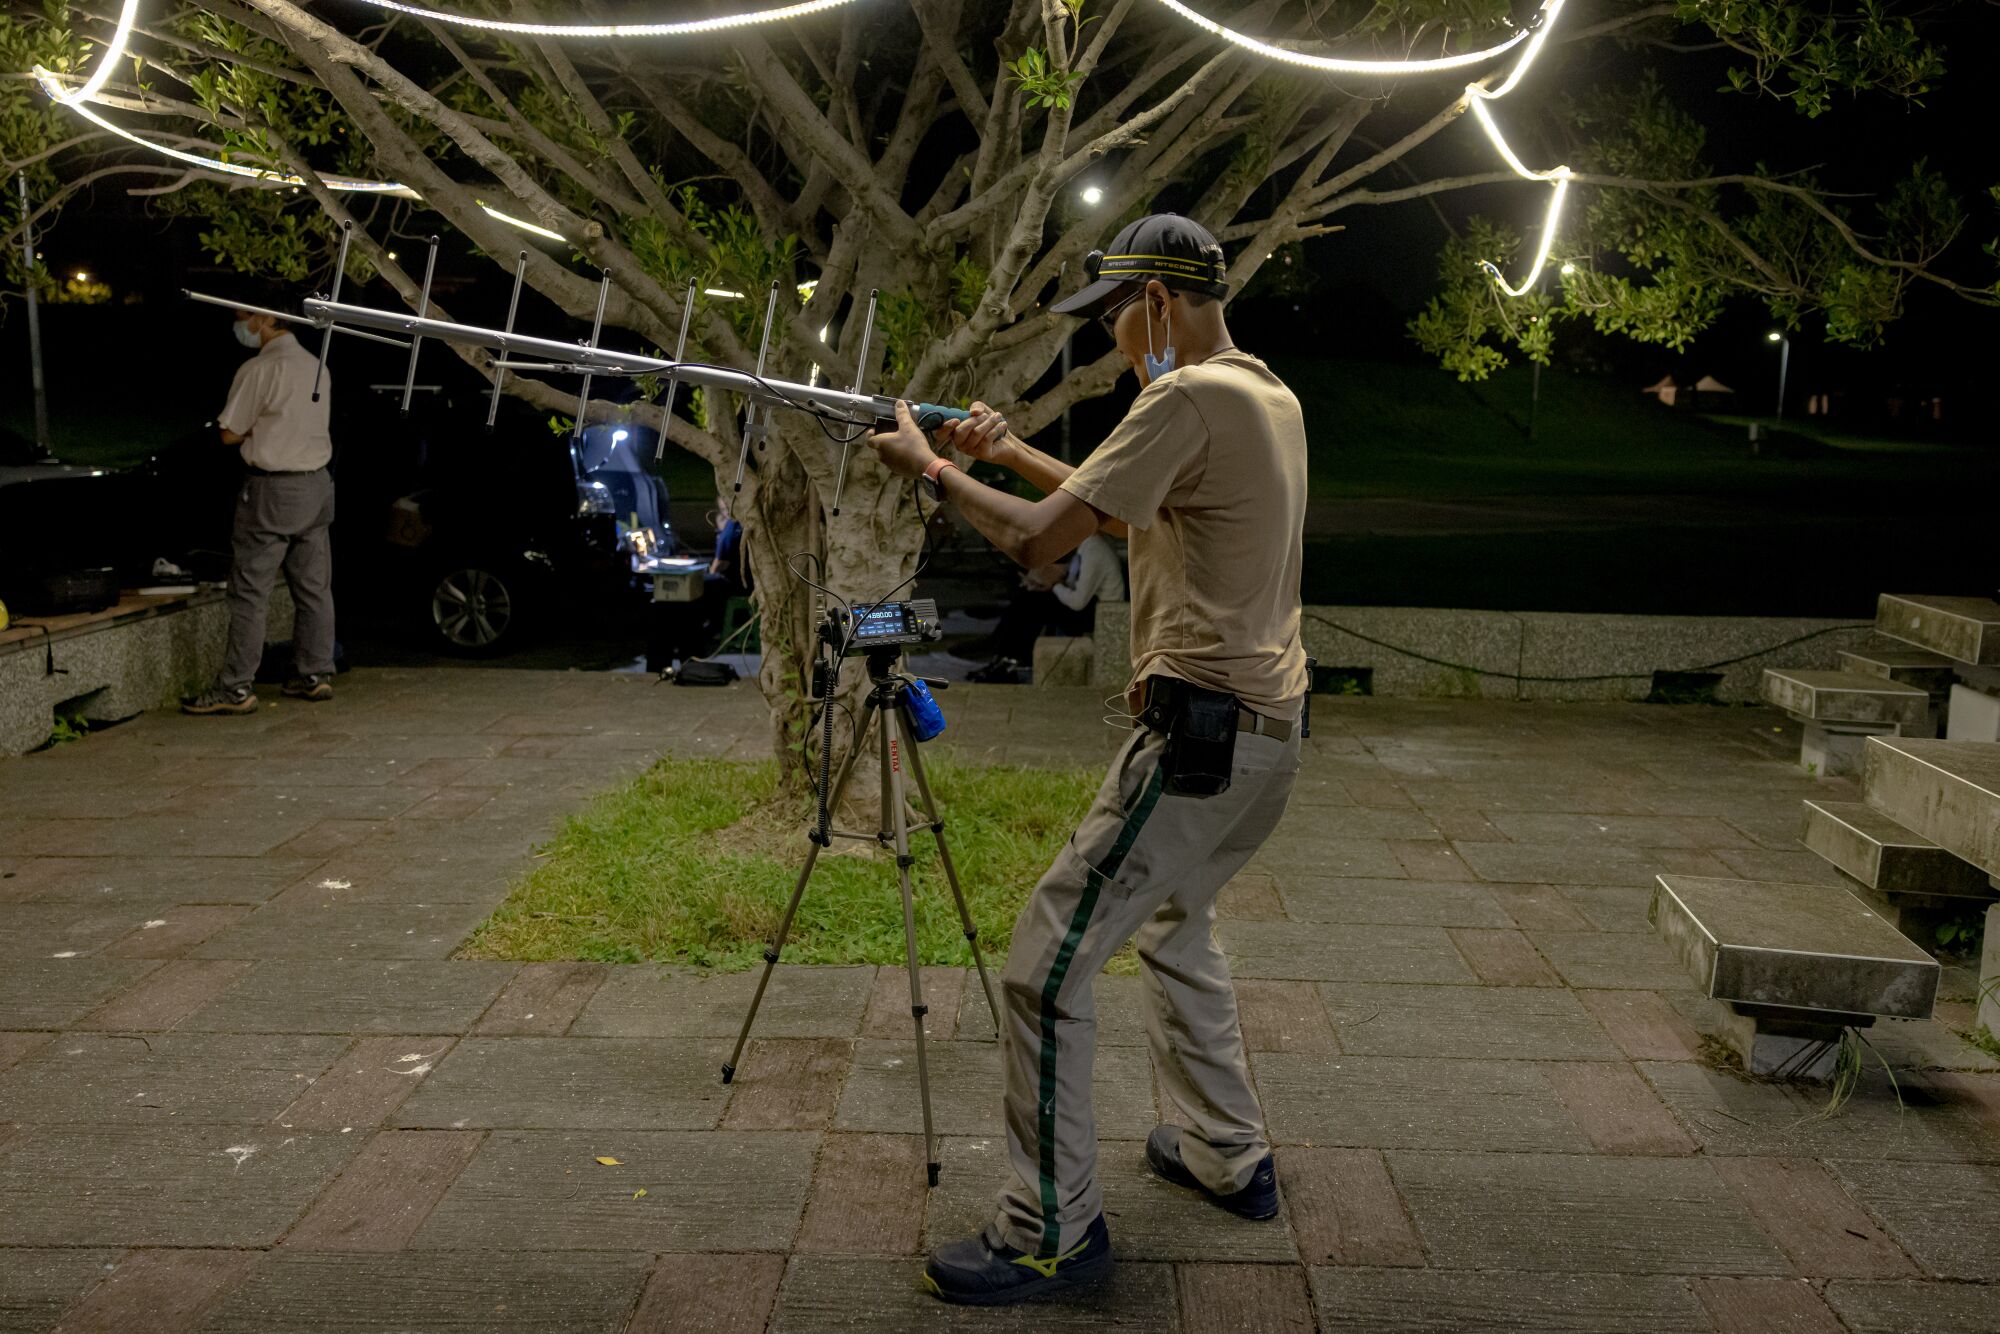 A man in T-shirt, pants and cap assembles an antenna near a tree with lights strung up